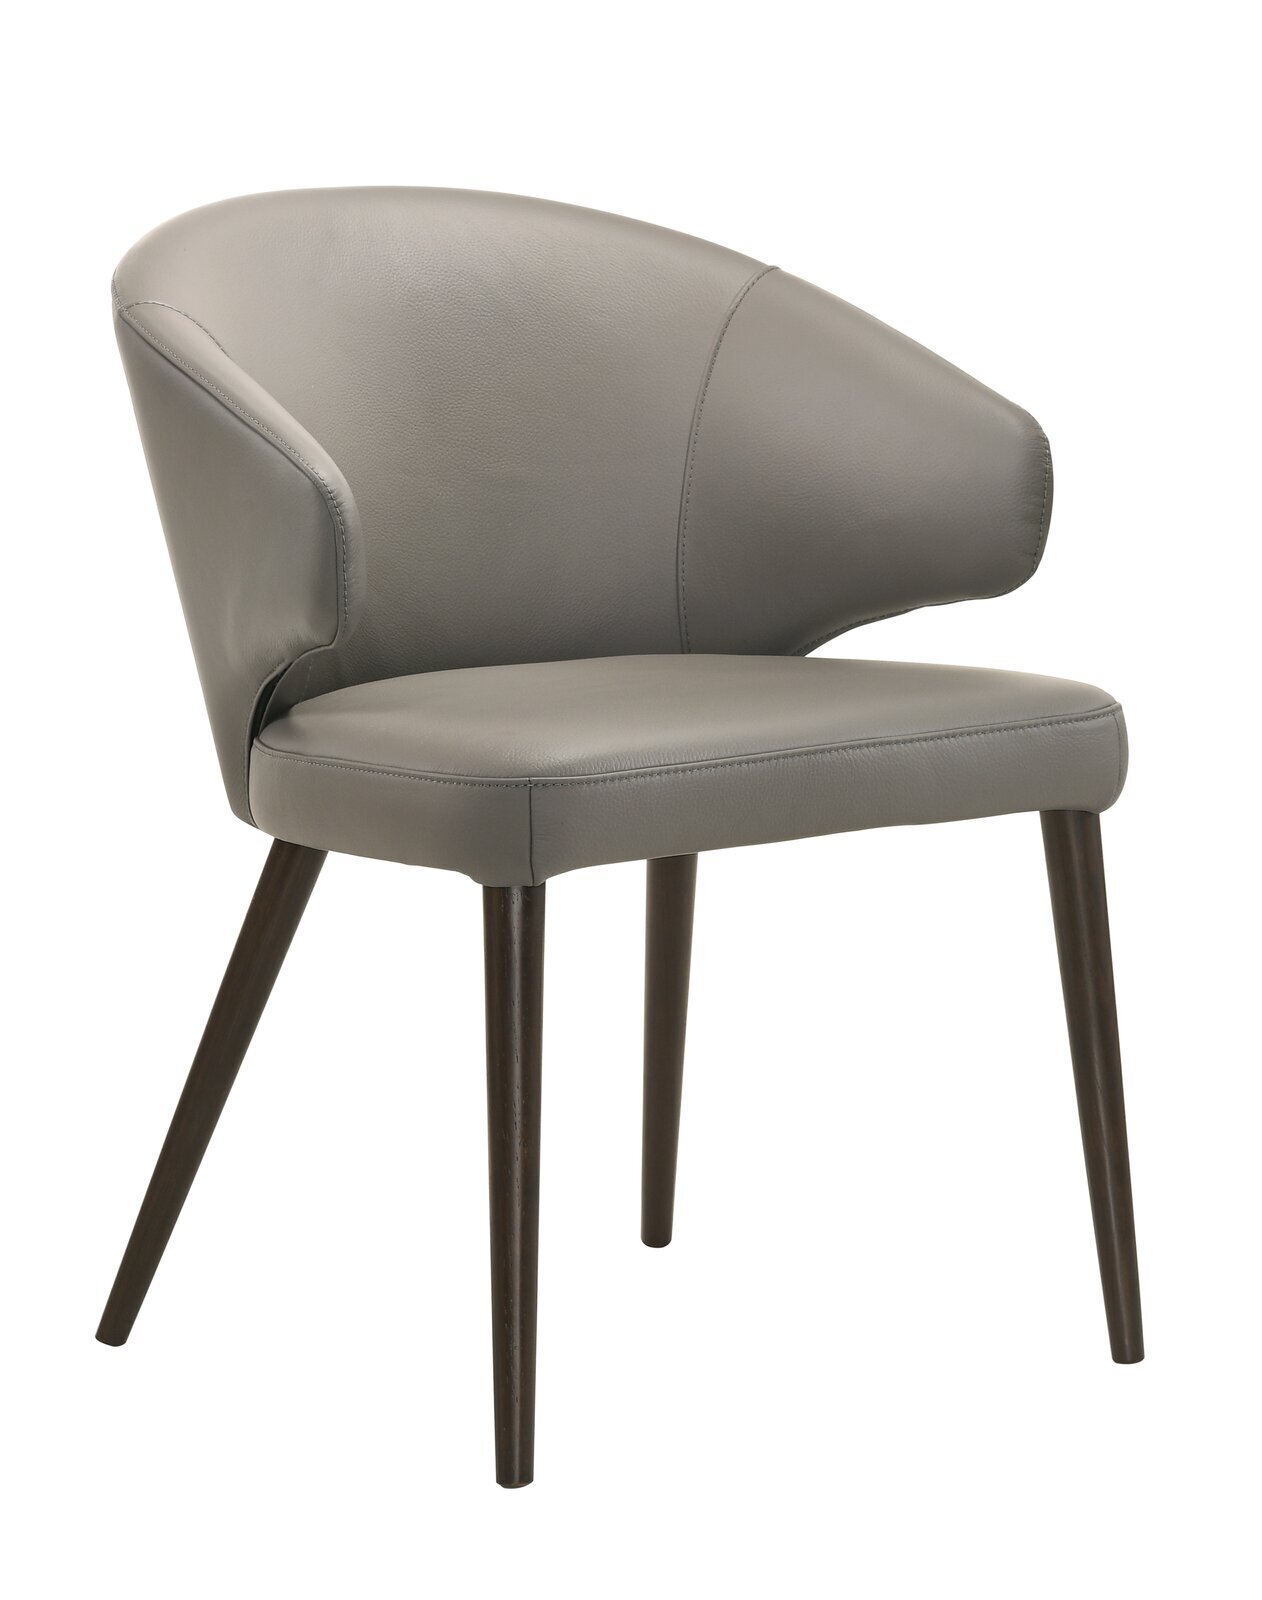 Half Circle Medium Backed Leather Arm Dining Chair